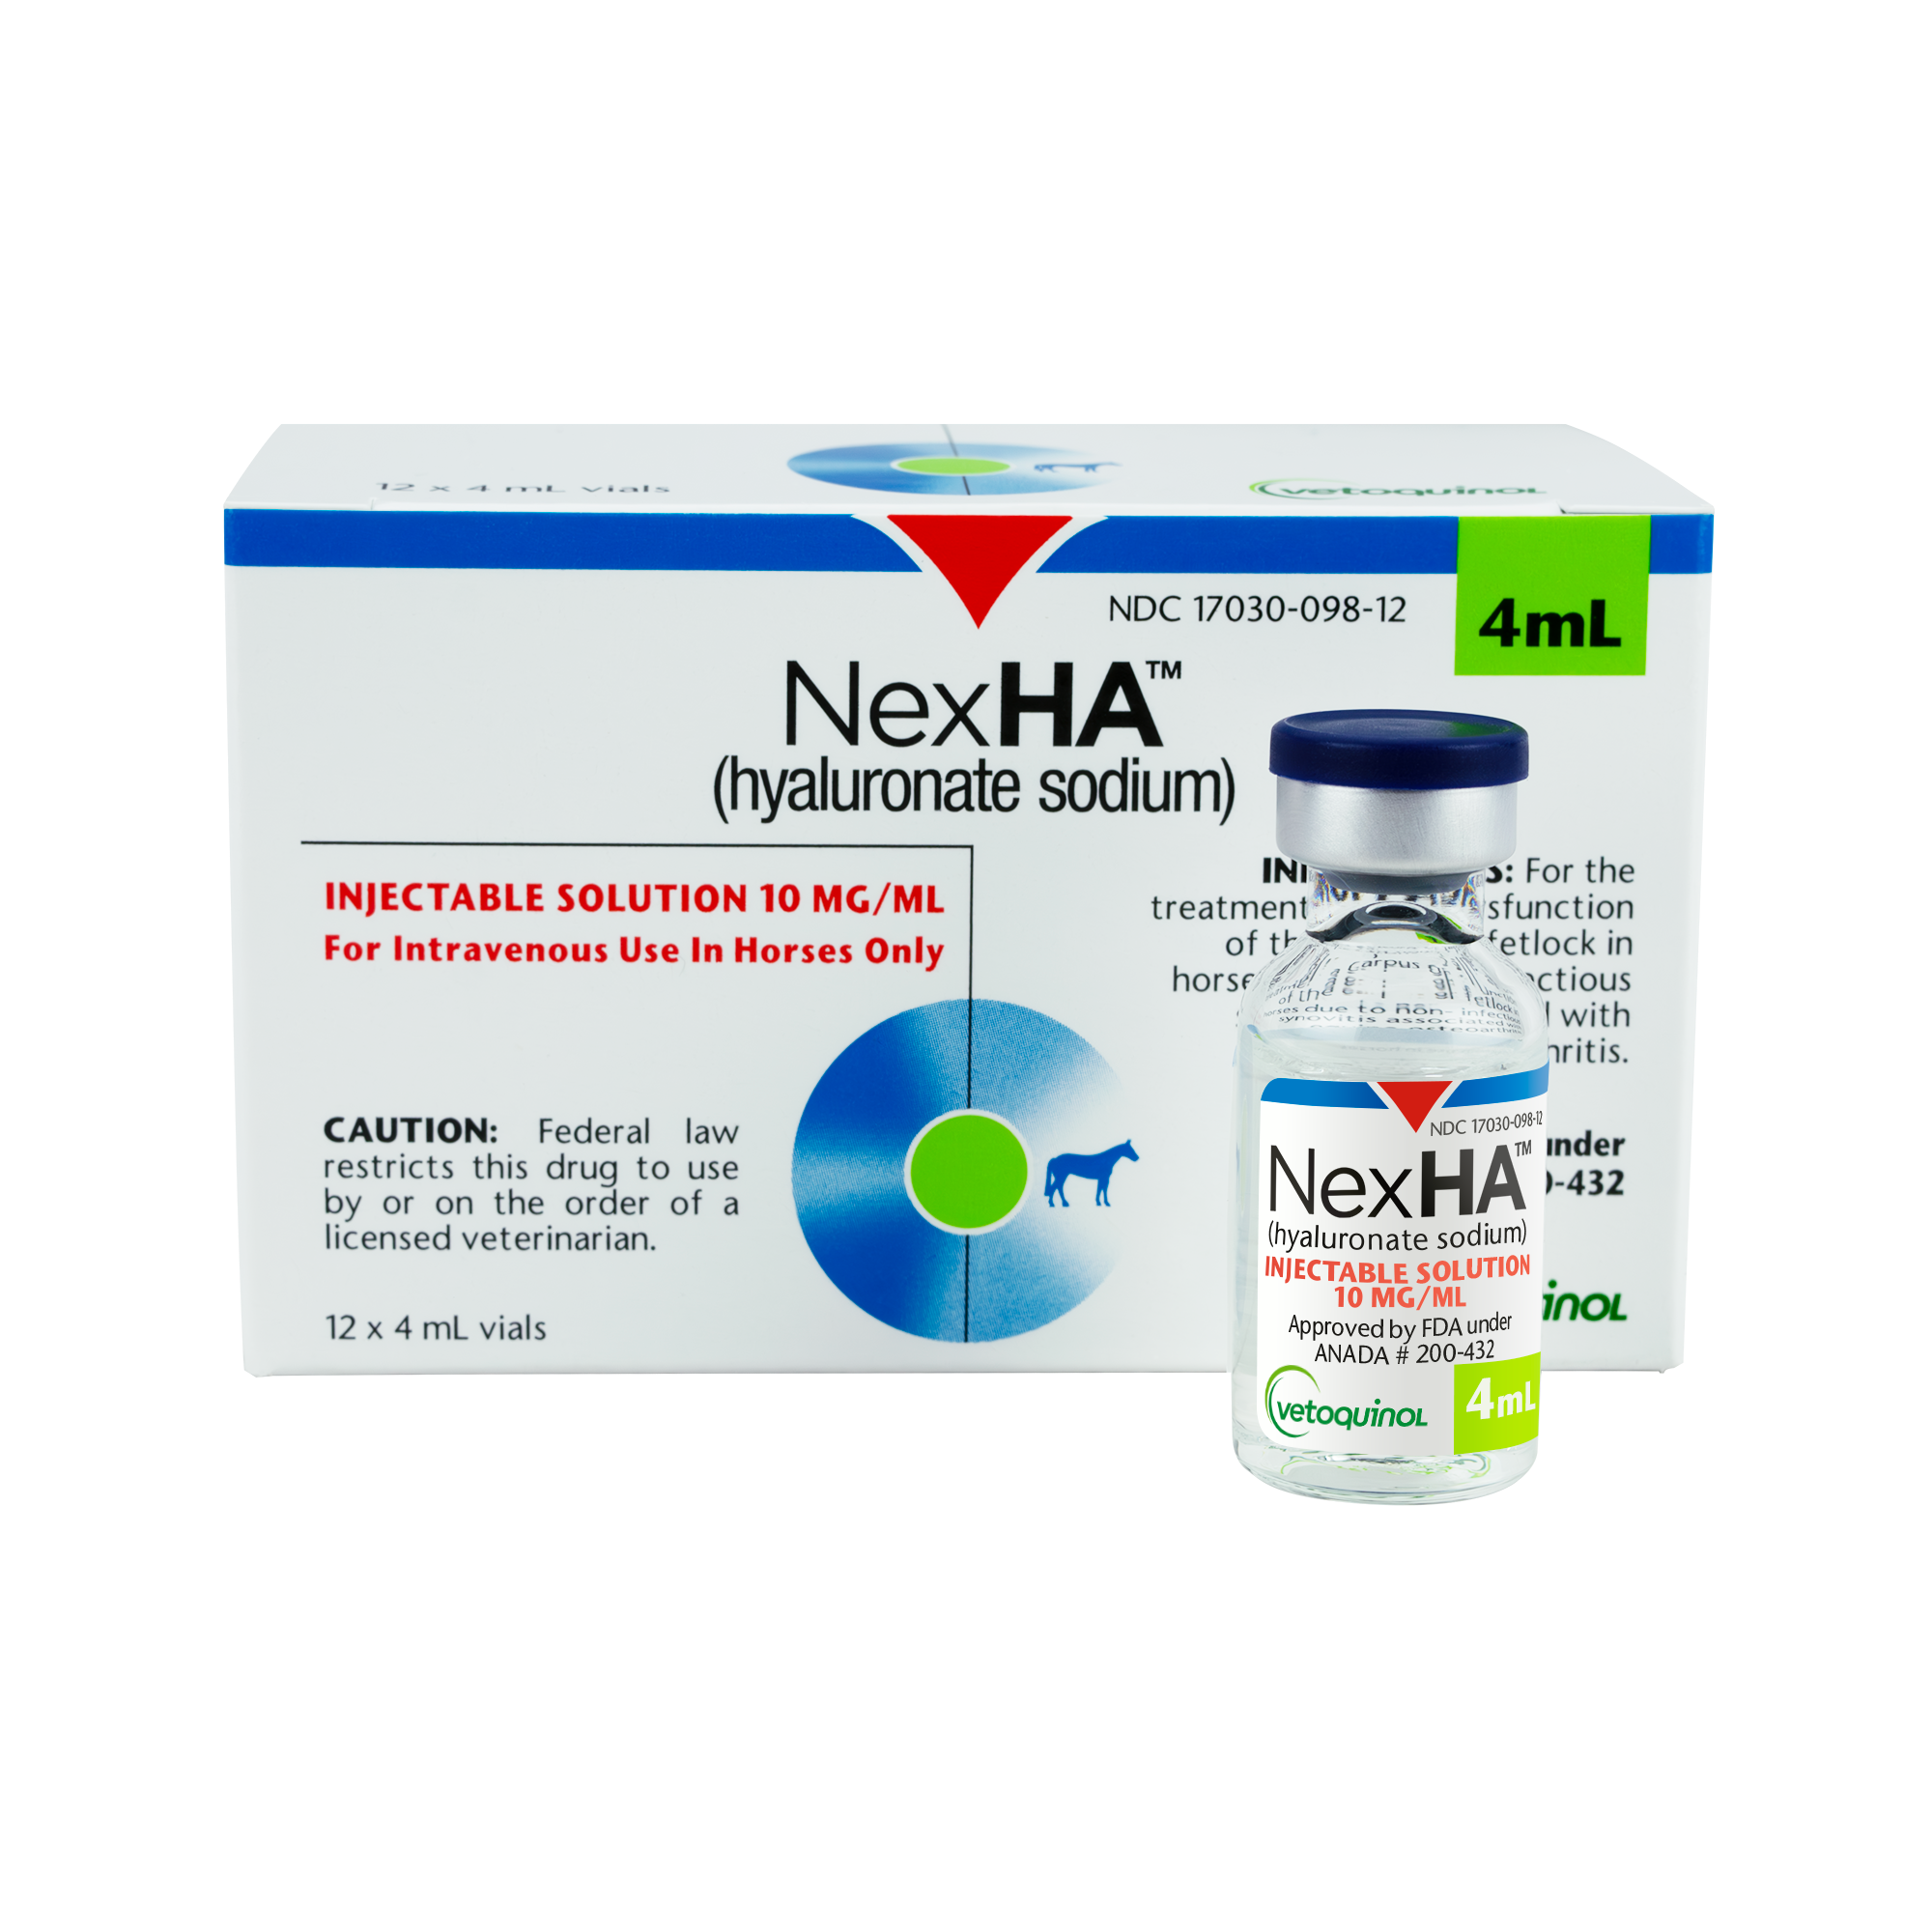 NexHA for equine osteoarthritis